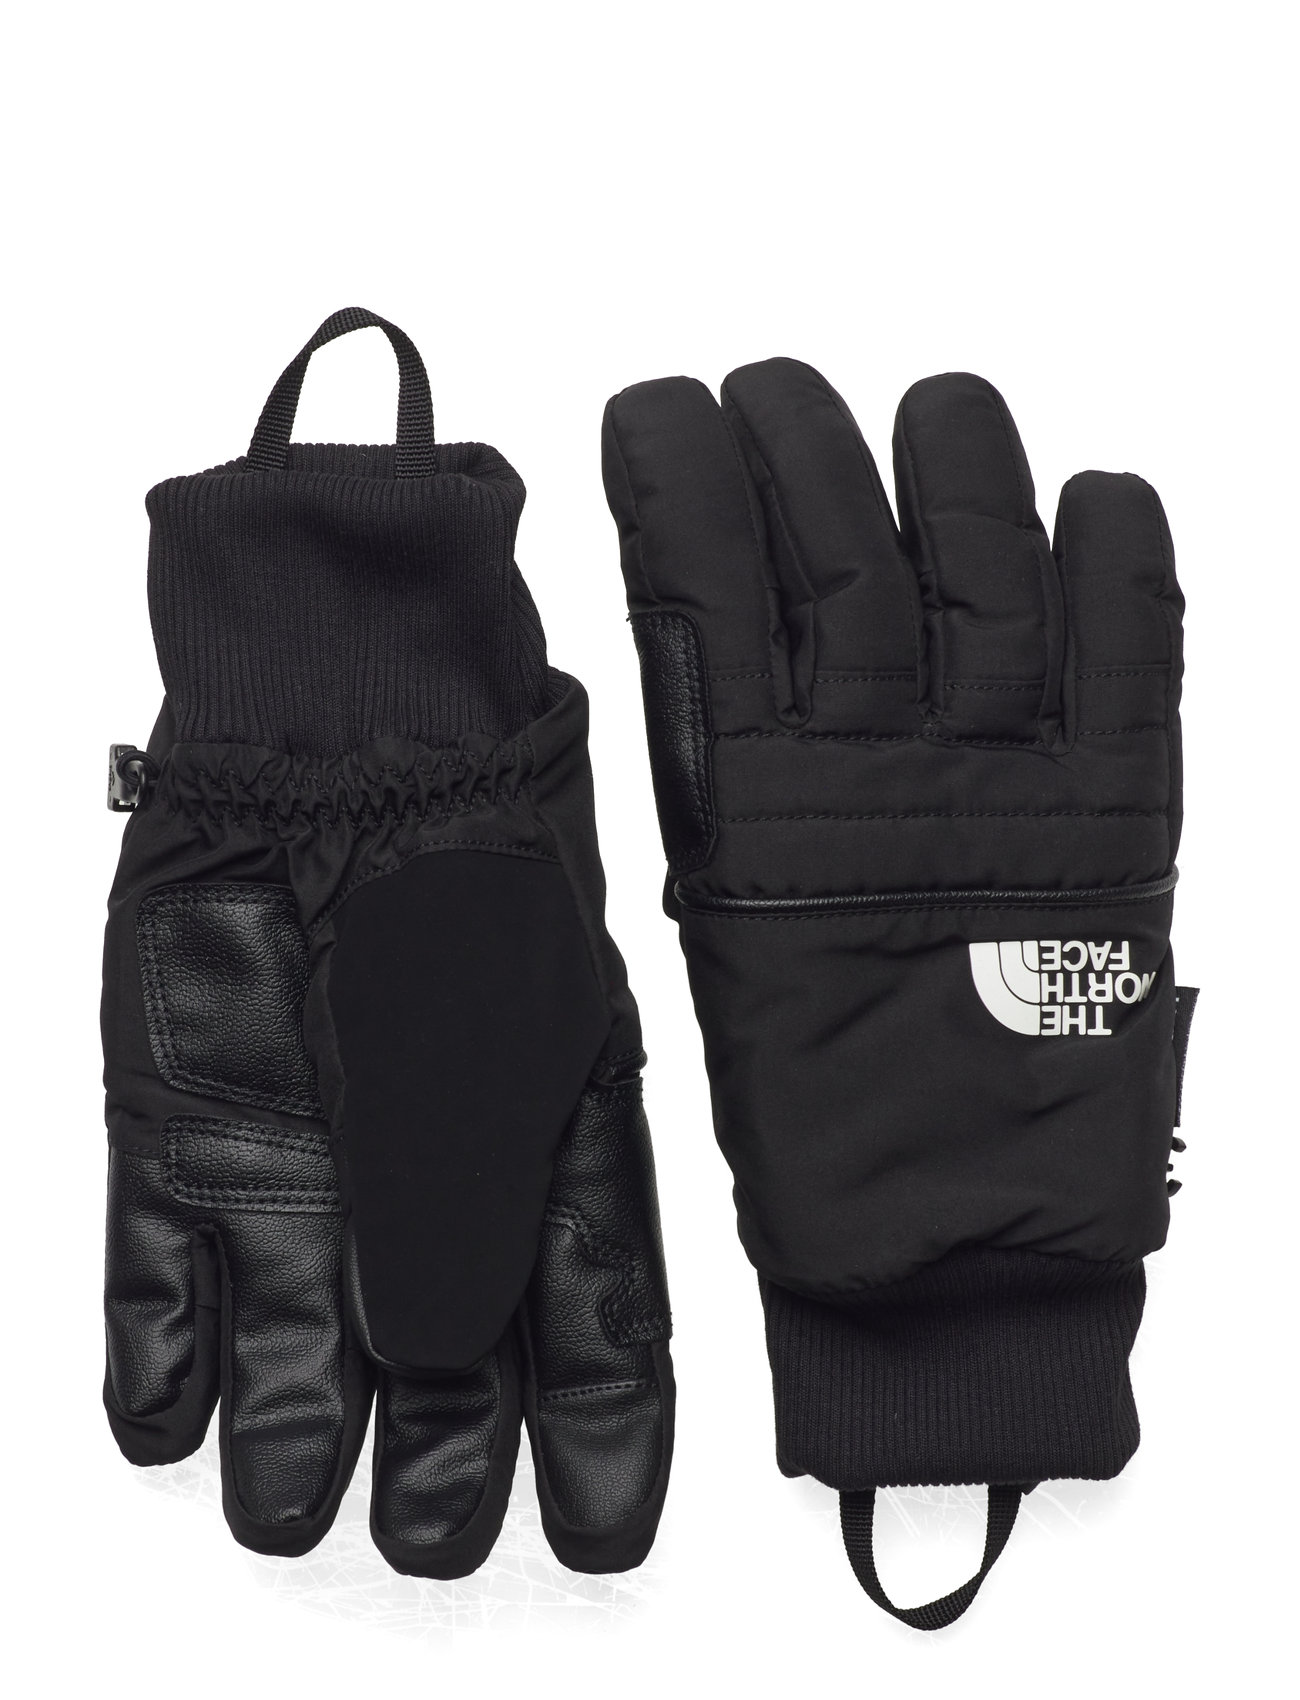 W Montana Utility Sg Glove Sport Gloves Finger Gloves Black The North Face